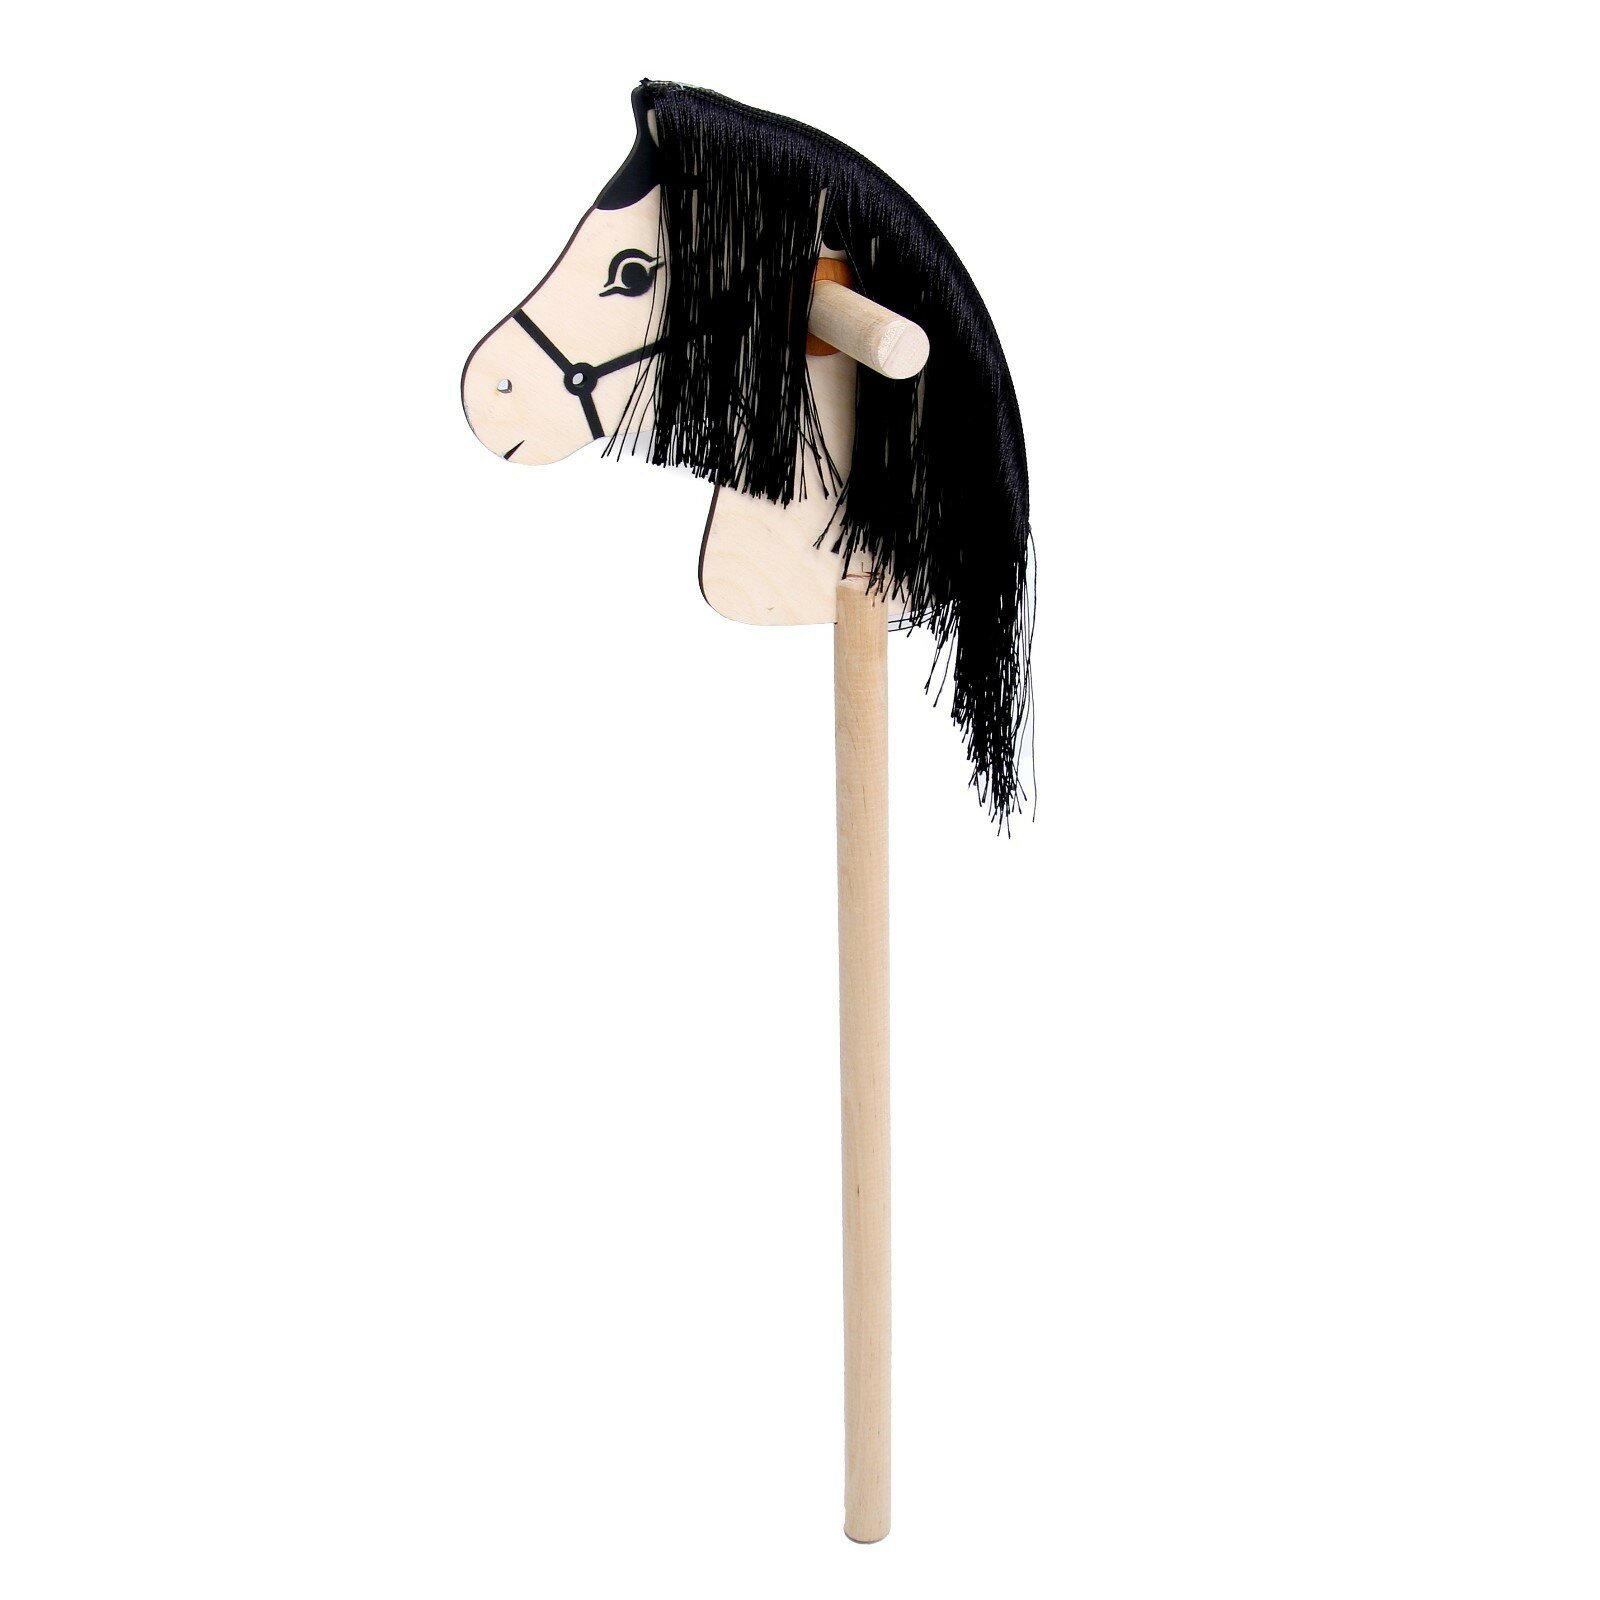 Игрушка «Лошадка на палке» с волосами, длина: 66 см